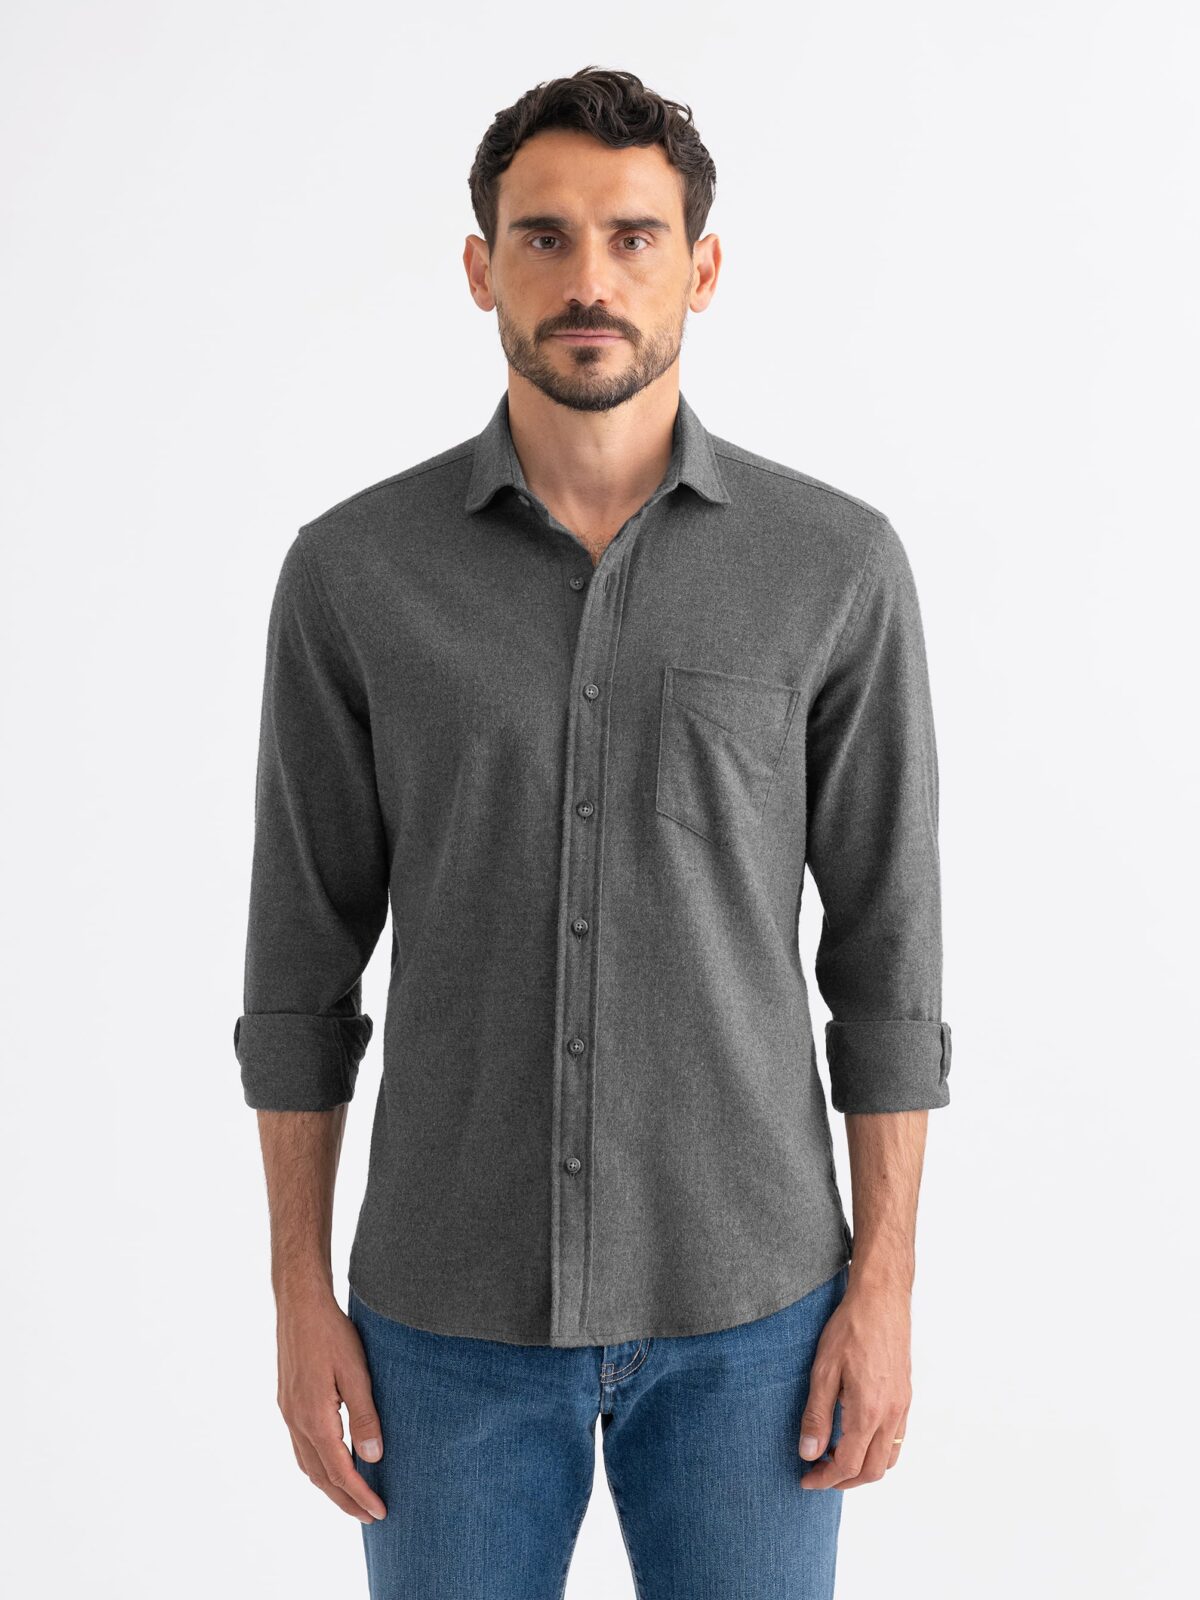 Teton Charcoal Melange Twill Flannel Shirt by Proper Cloth